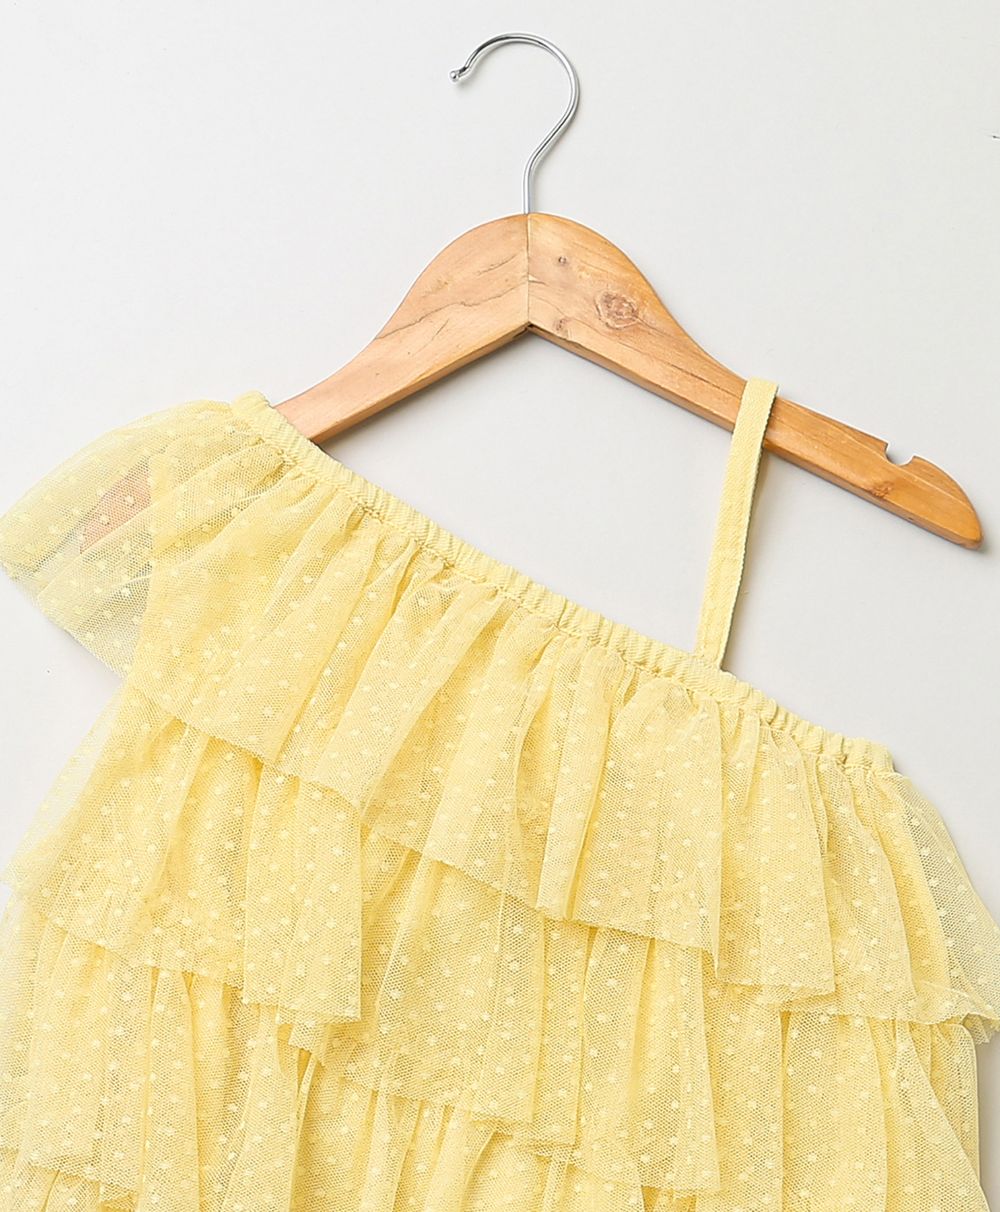 Lemon Yellow Ruffled Off-Shoulder Party Dress